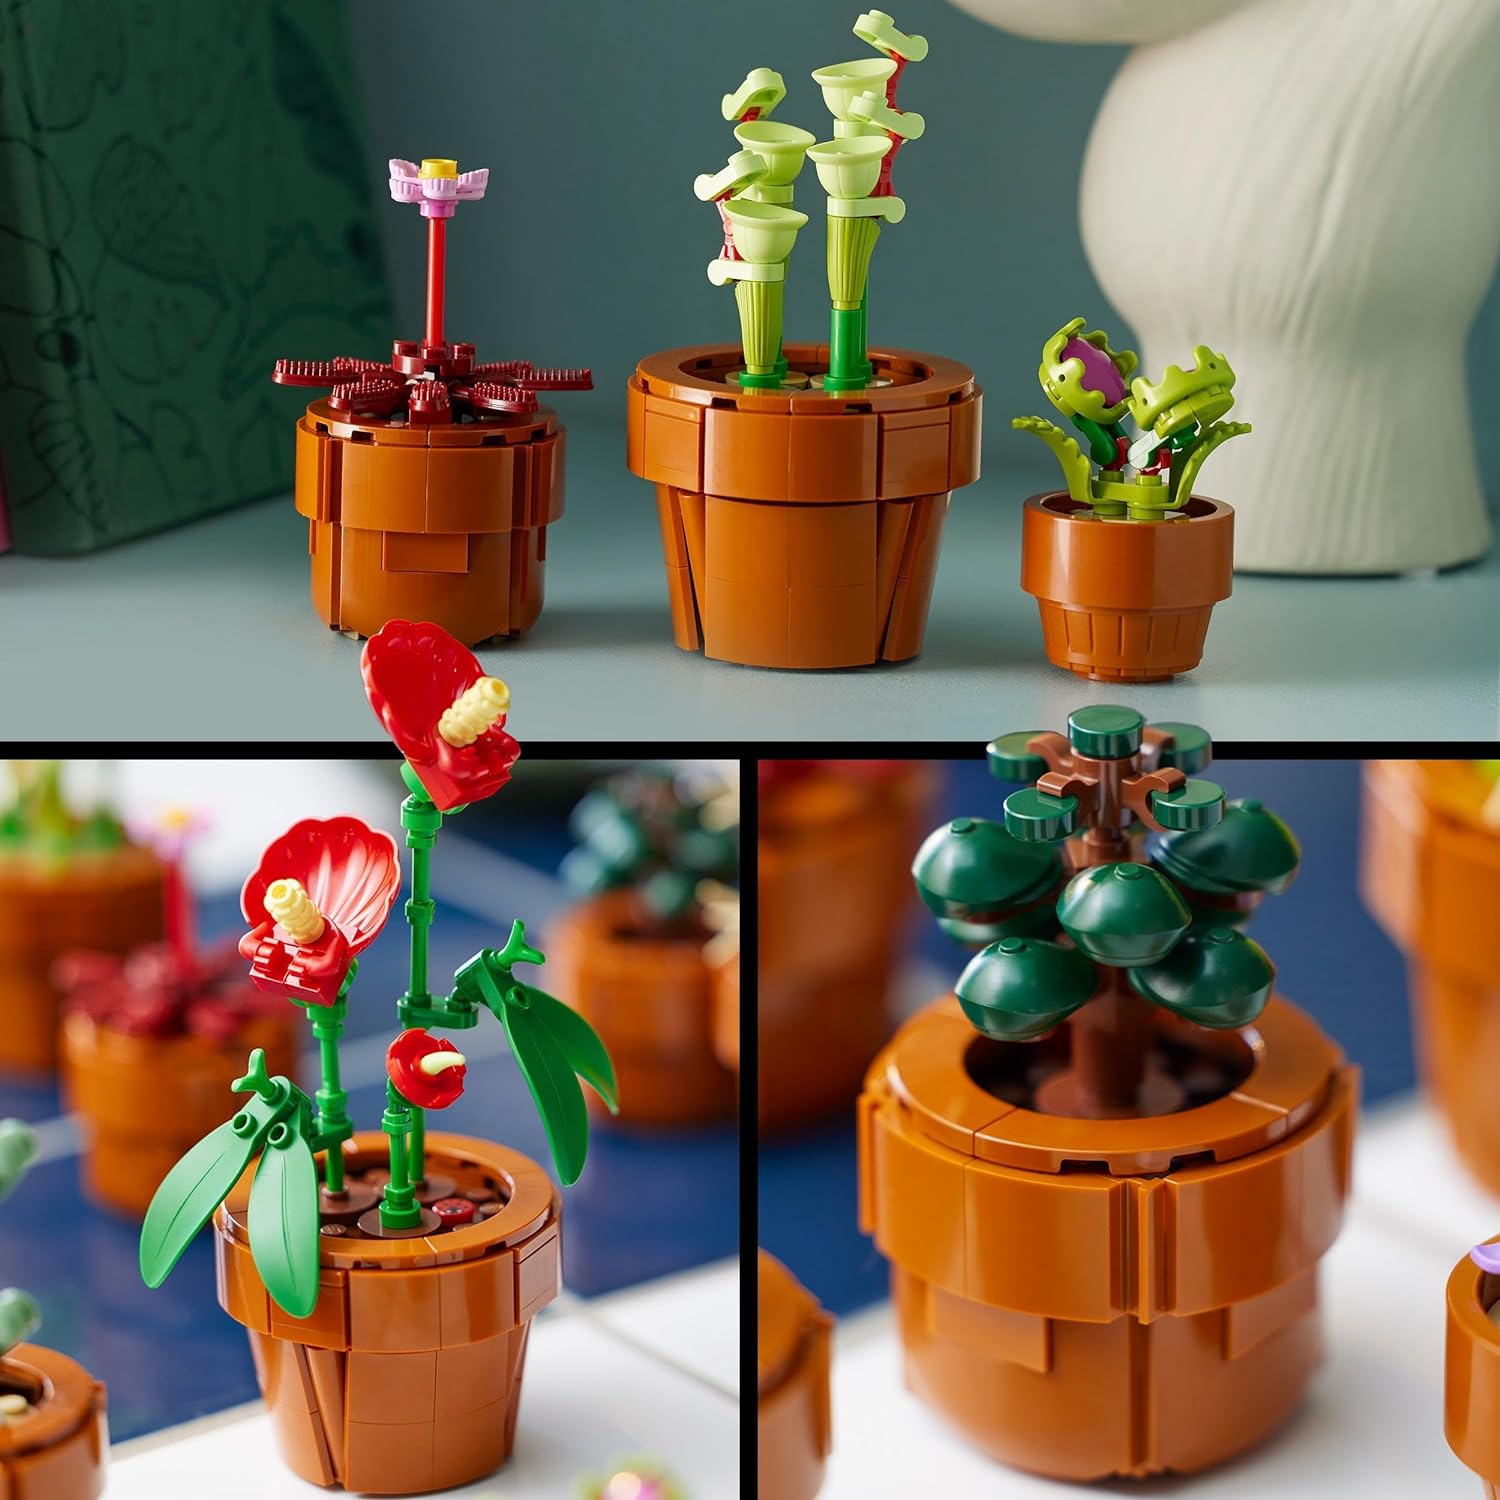 Lego 10329 Tiny Plants